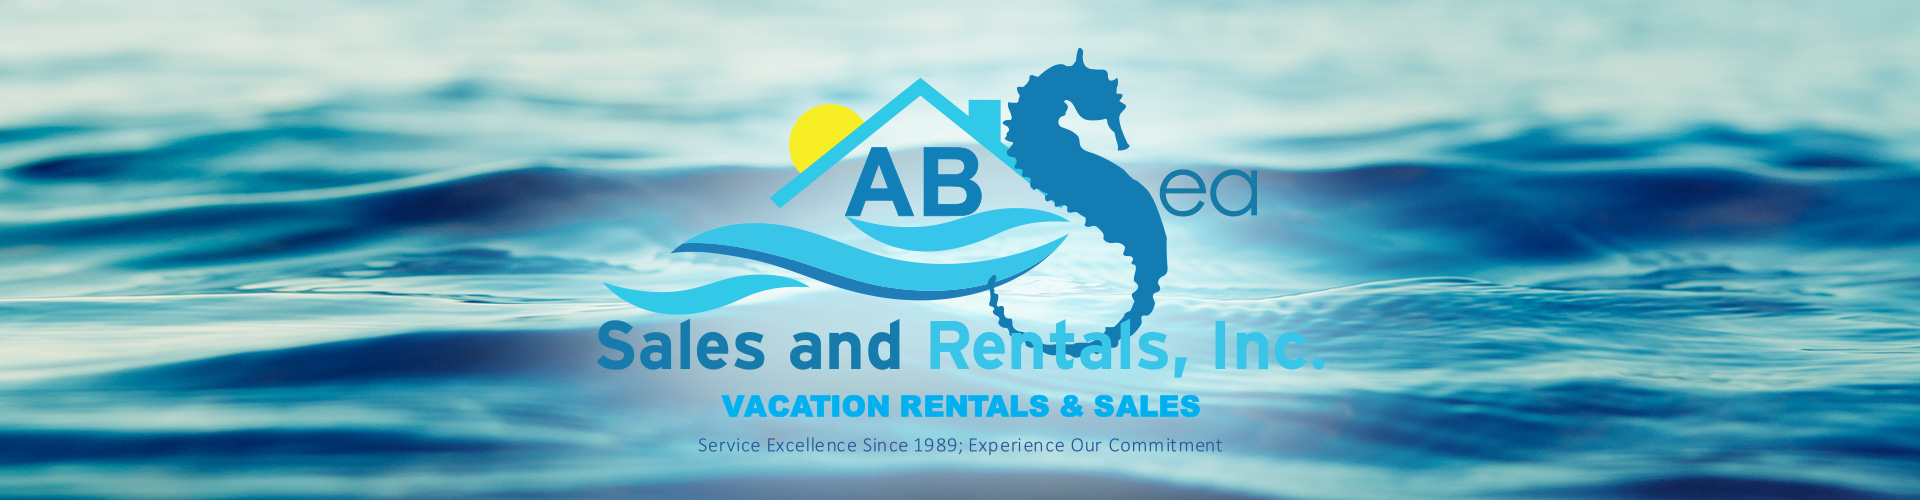 A B Sea Sales And Rentals Banner